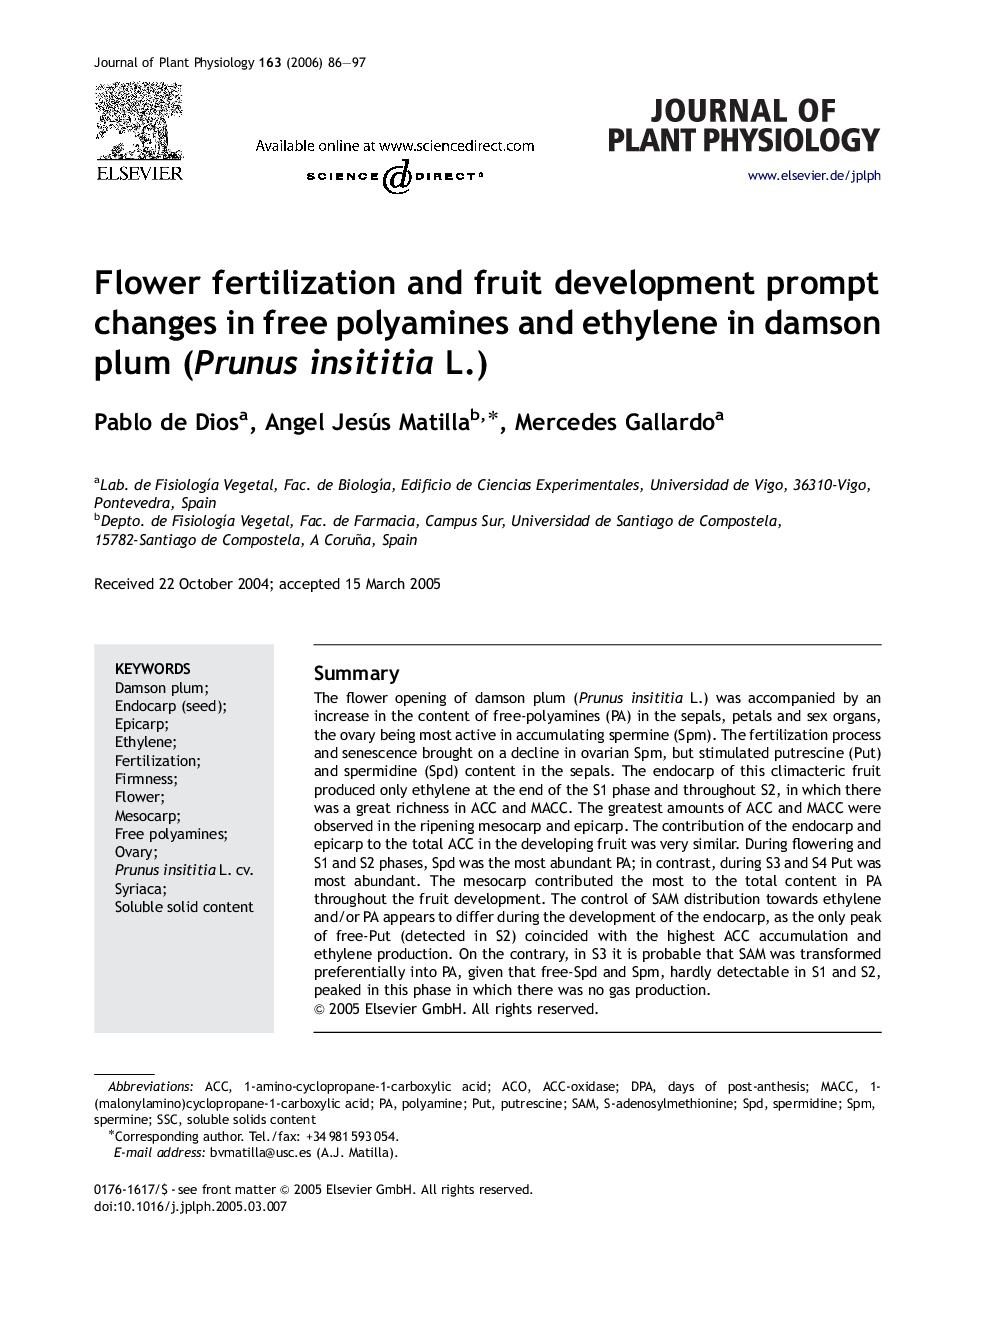 Flower fertilization and fruit development prompt changes in free polyamines and ethylene in damson plum (Prunus insititia L.)